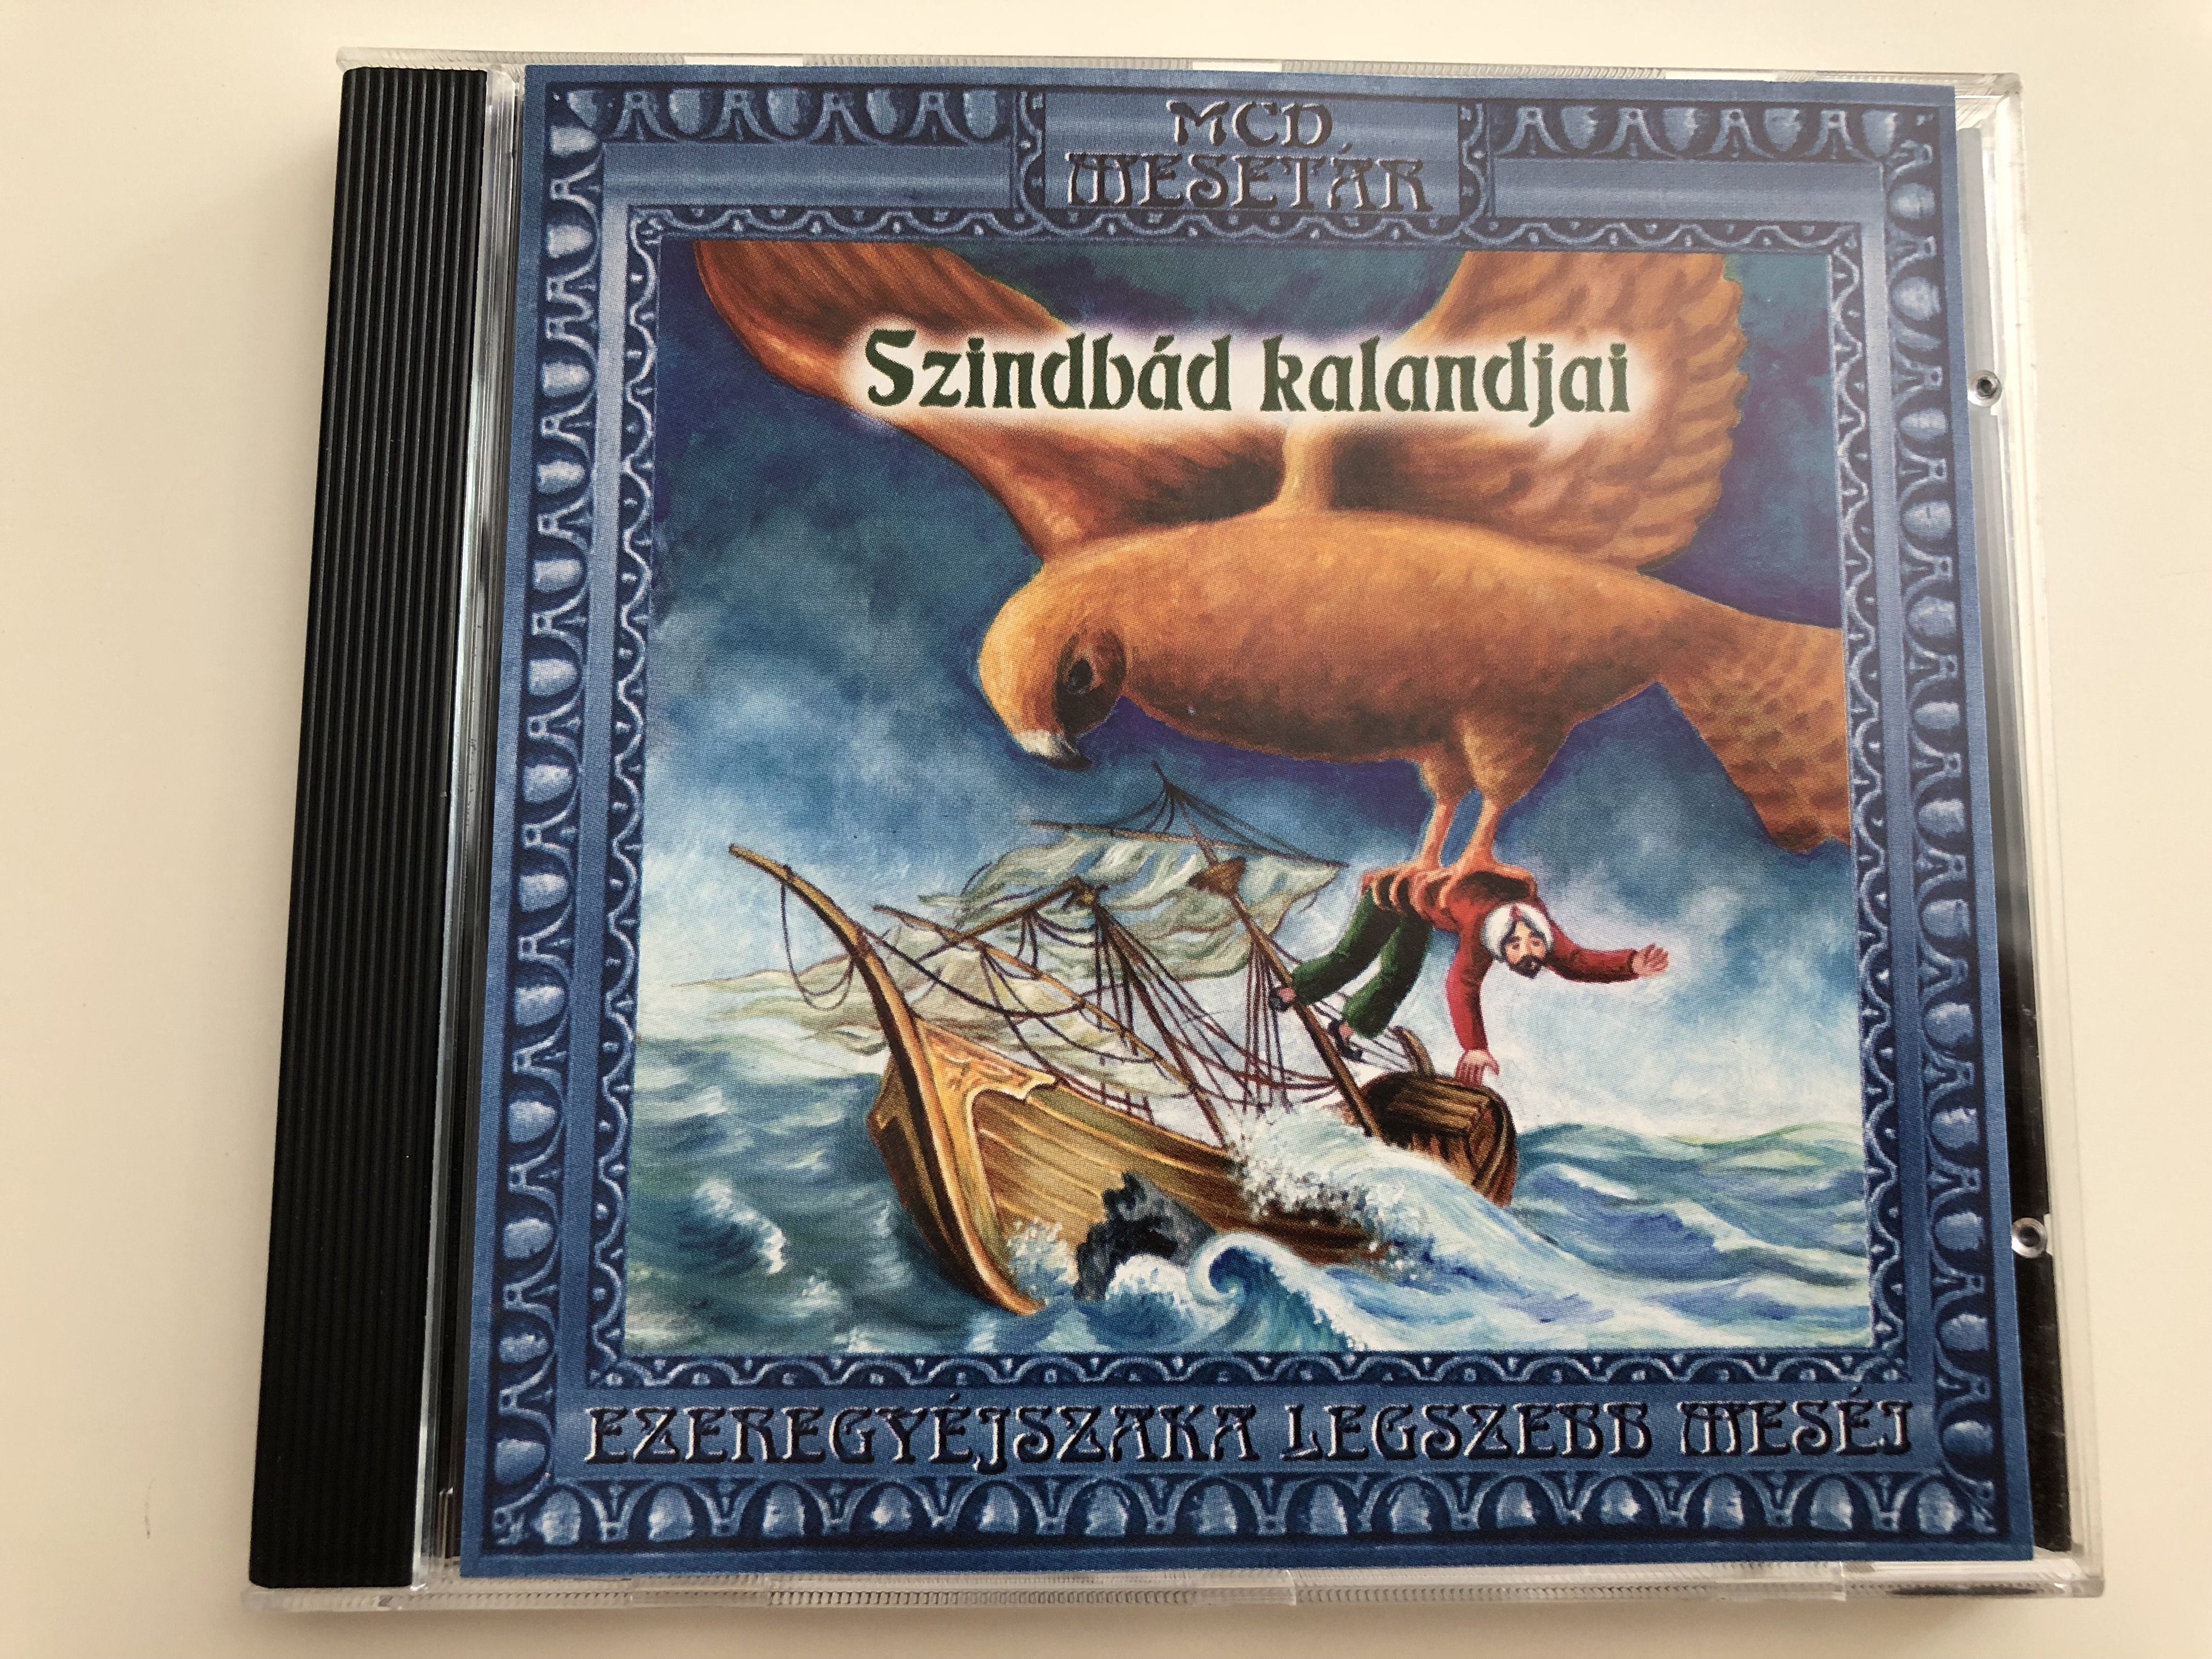 szindb-d-kalandjai-mcd-meset-r-audio-book-read-by-moln-r-piroska-audio-cd-2003-1-.jpg